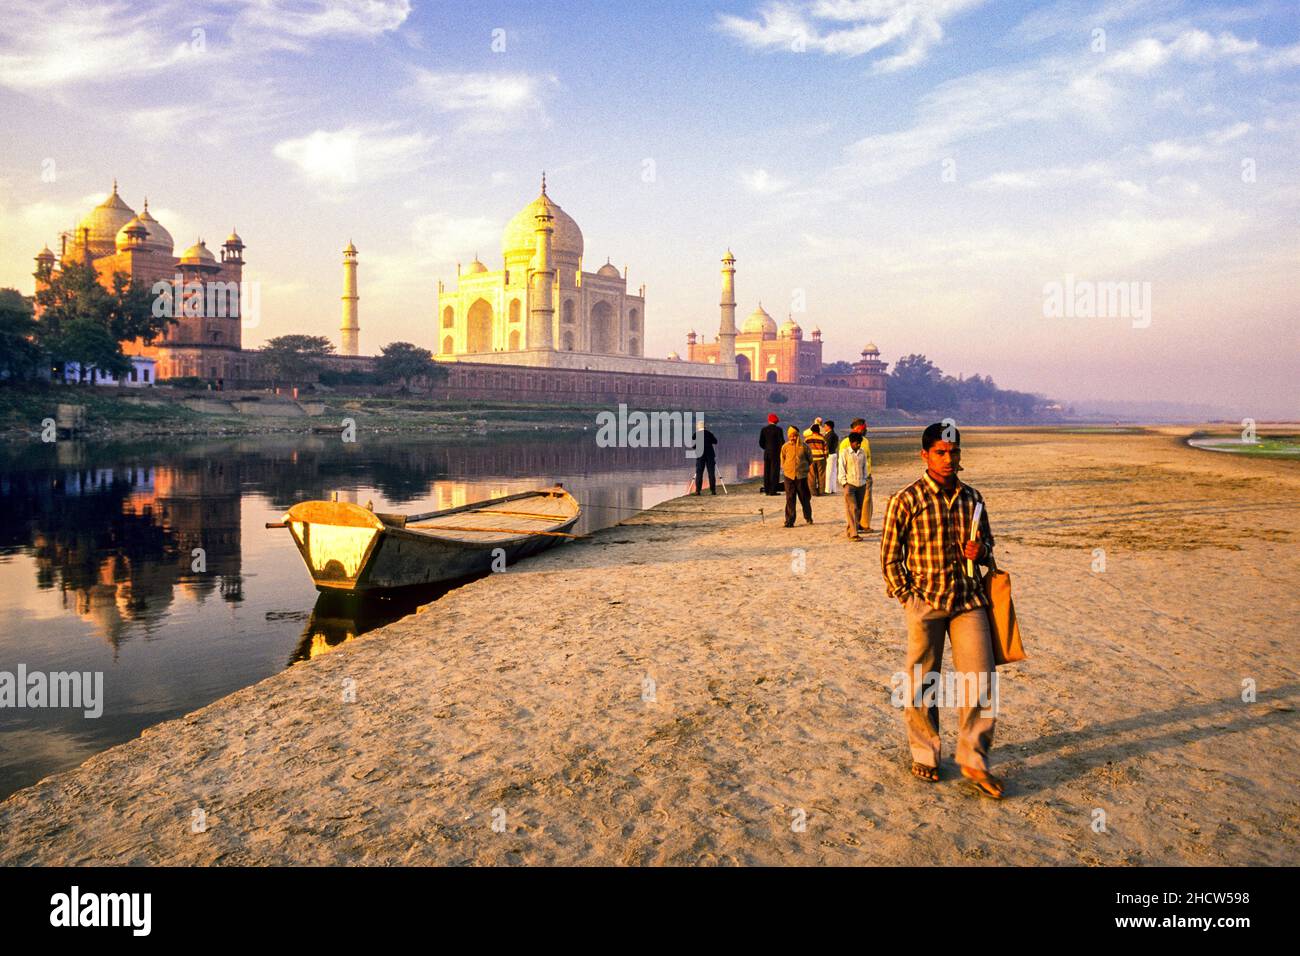 The Taj Mahal at dawn, across the River Yamuna in Agra, Uttar Pradesh, India. Stock Photo